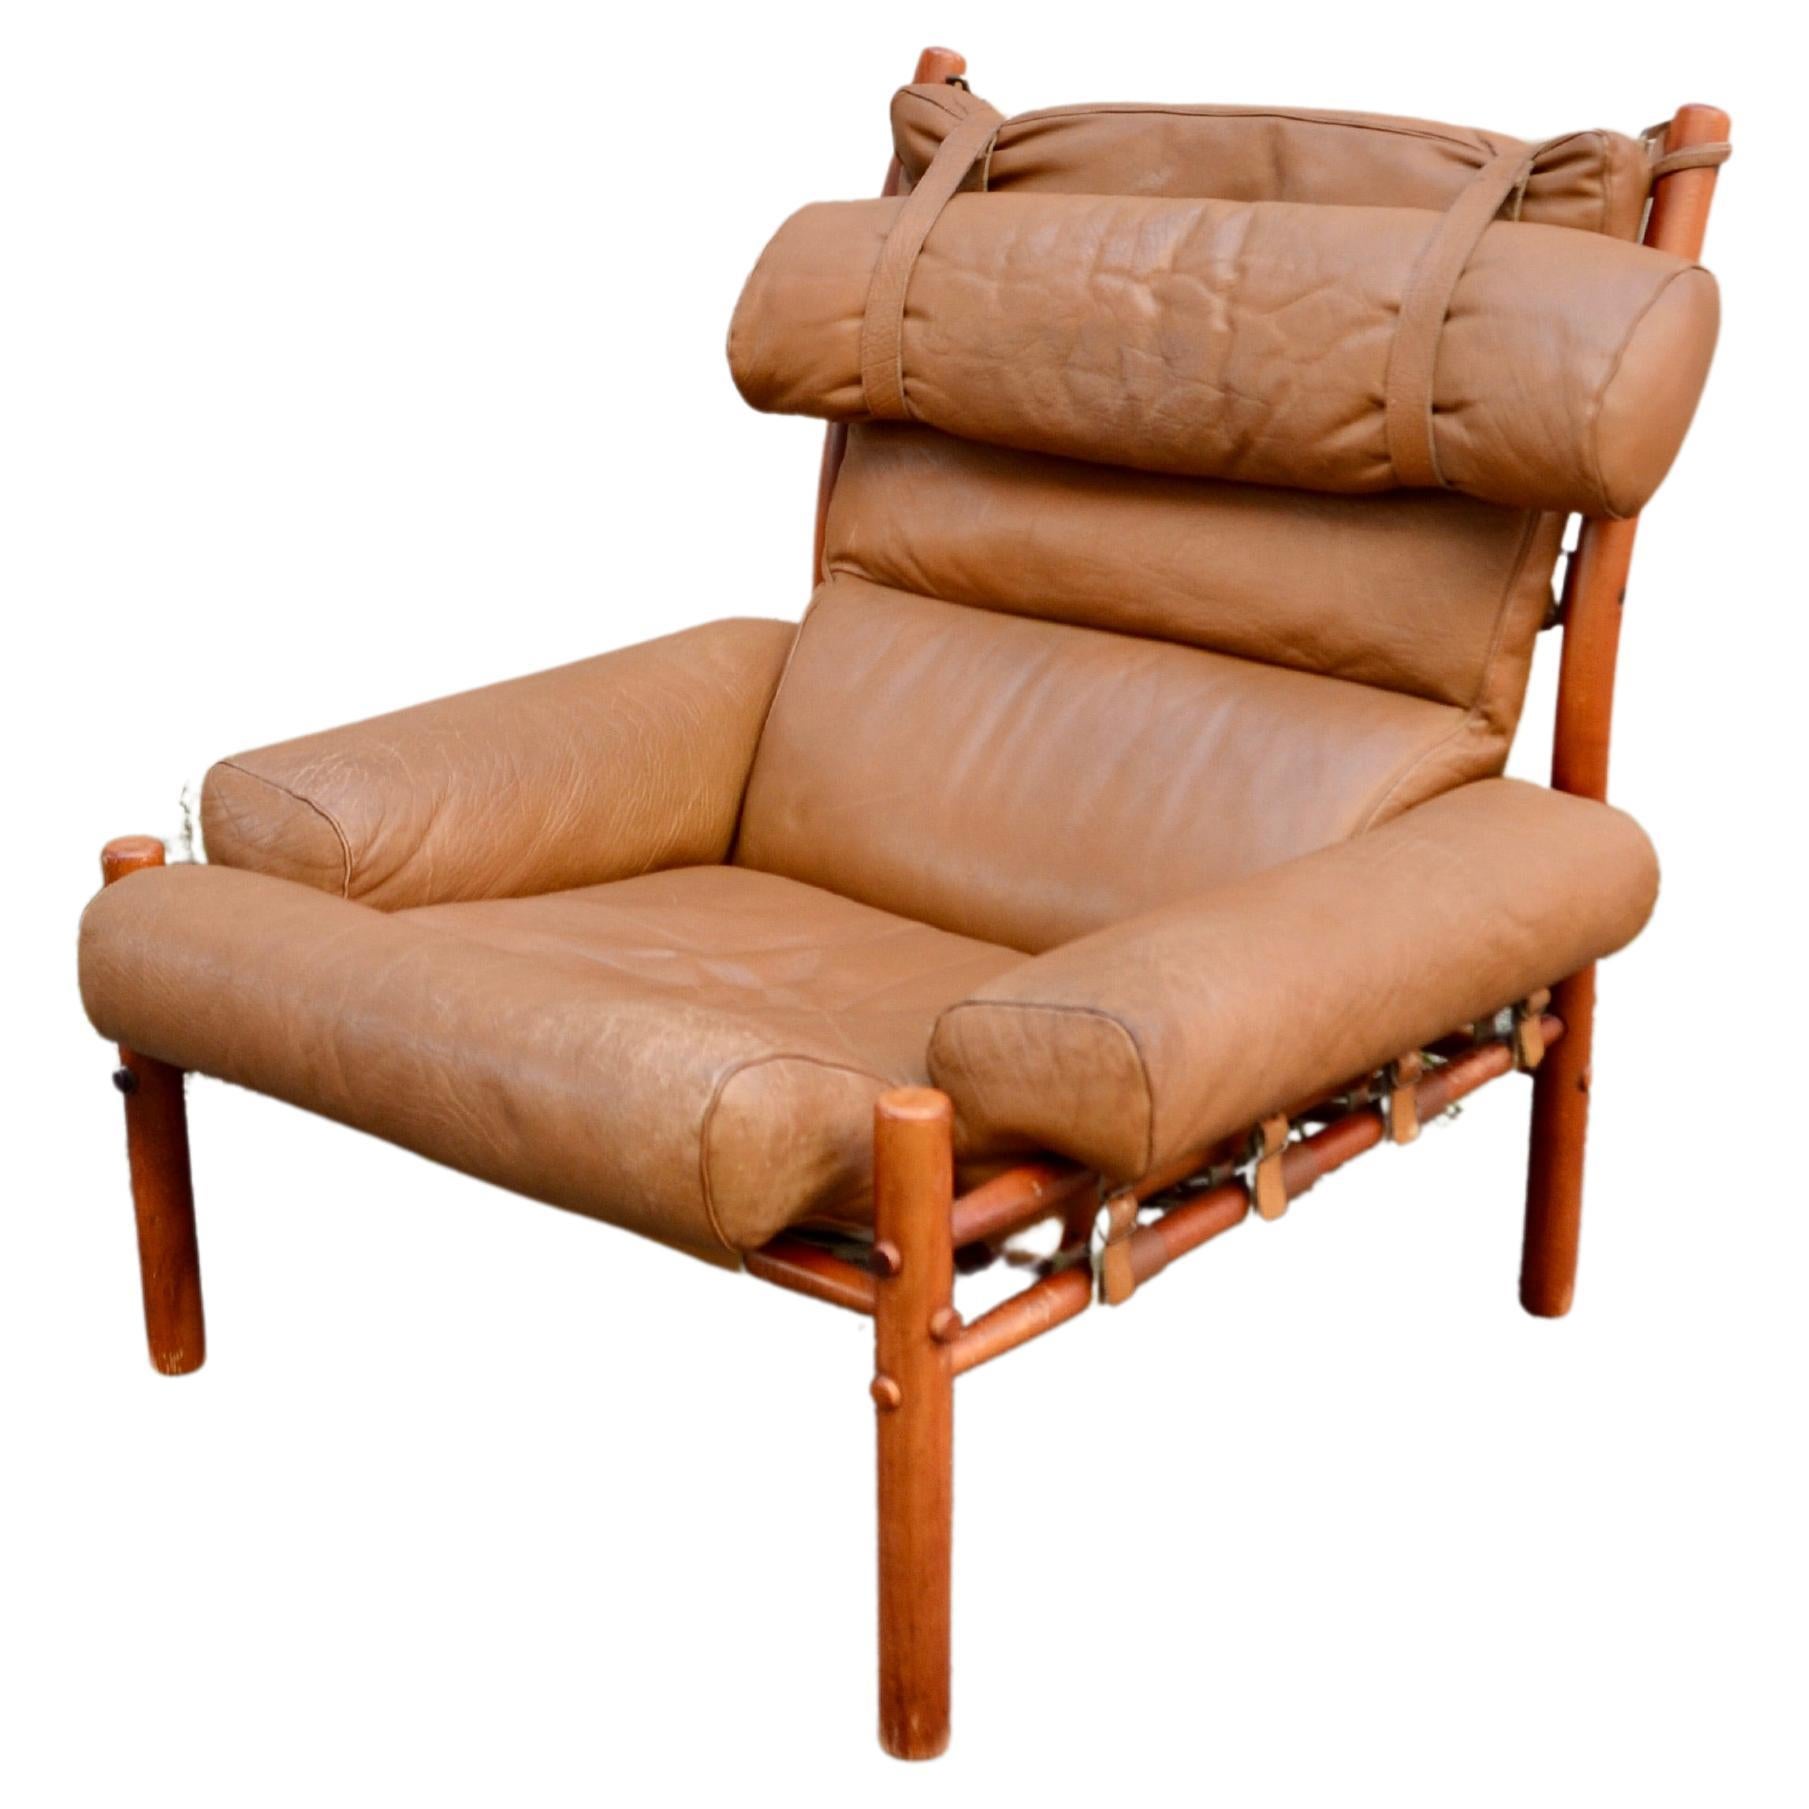 Chaise longue Inca Caramel Leather modèle Arne Norell